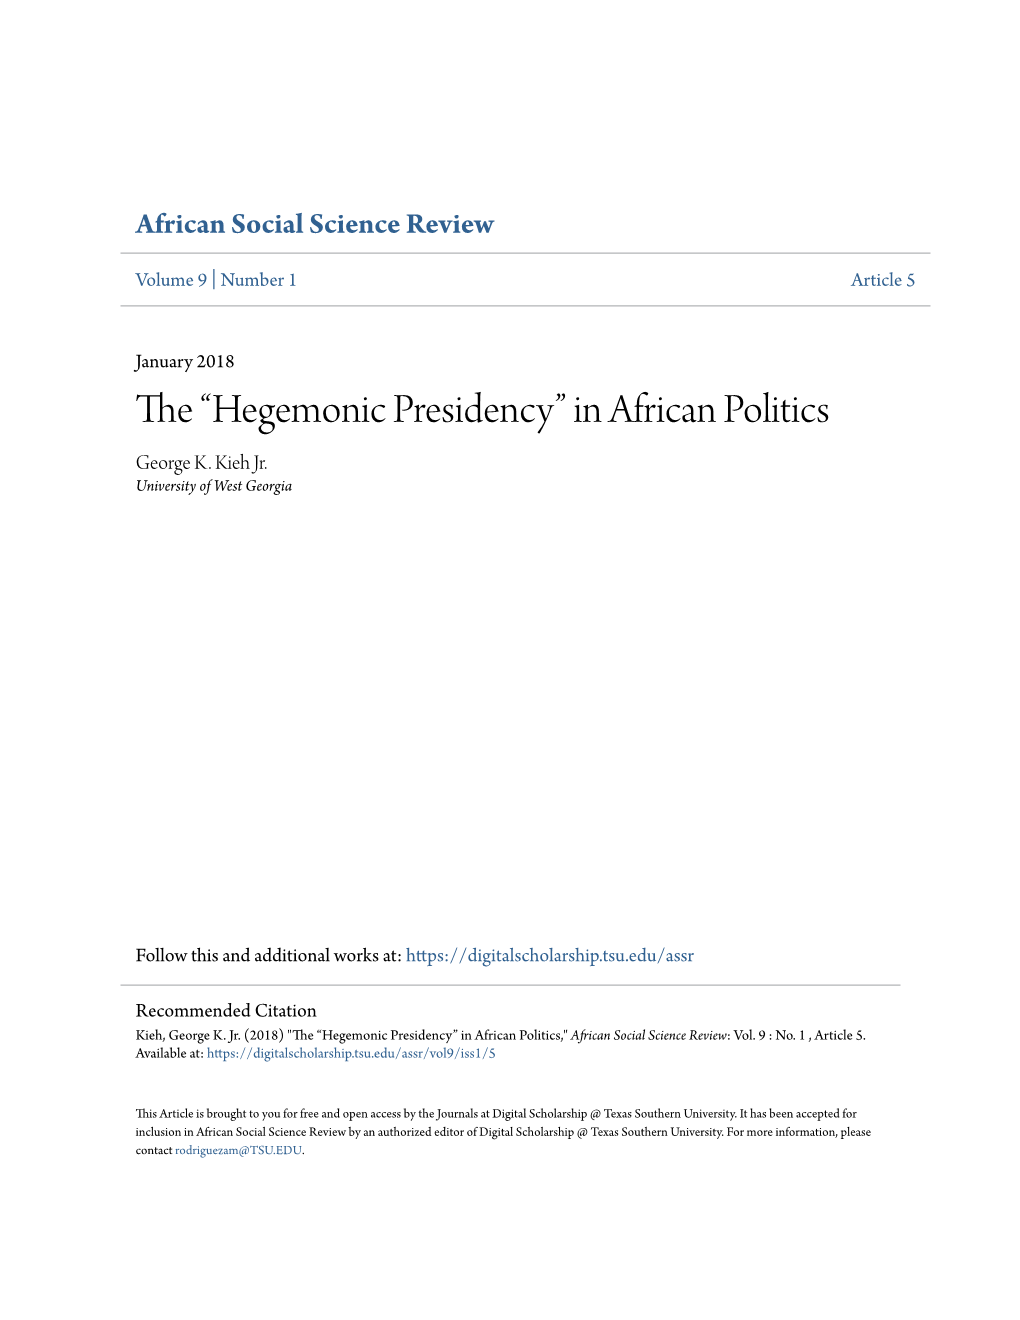 The “Hegemonic Presidency” in African Politics George K